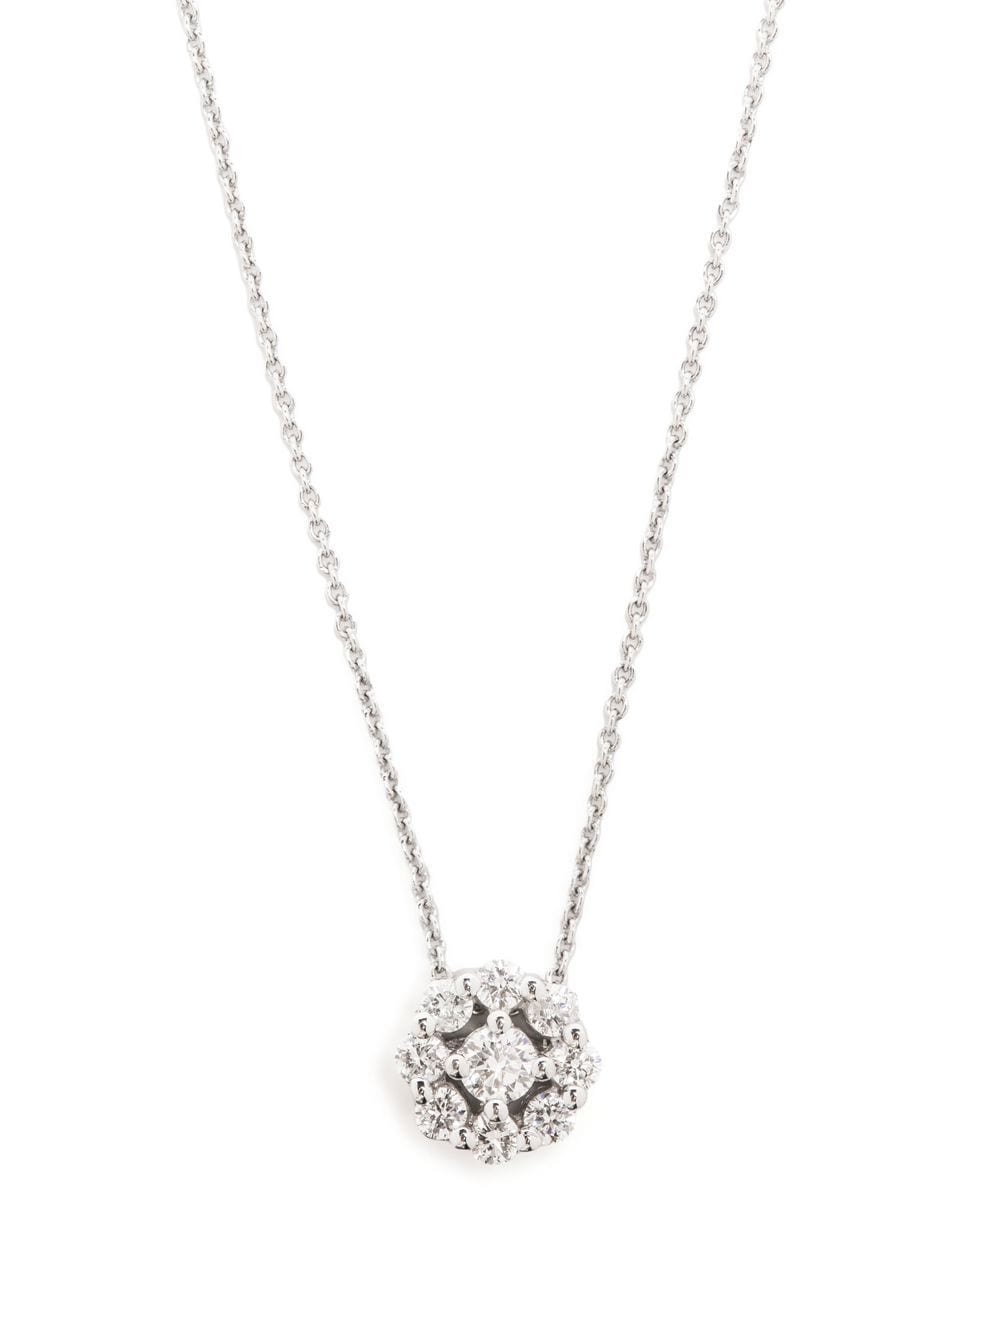 18kt white gold diamond necklace